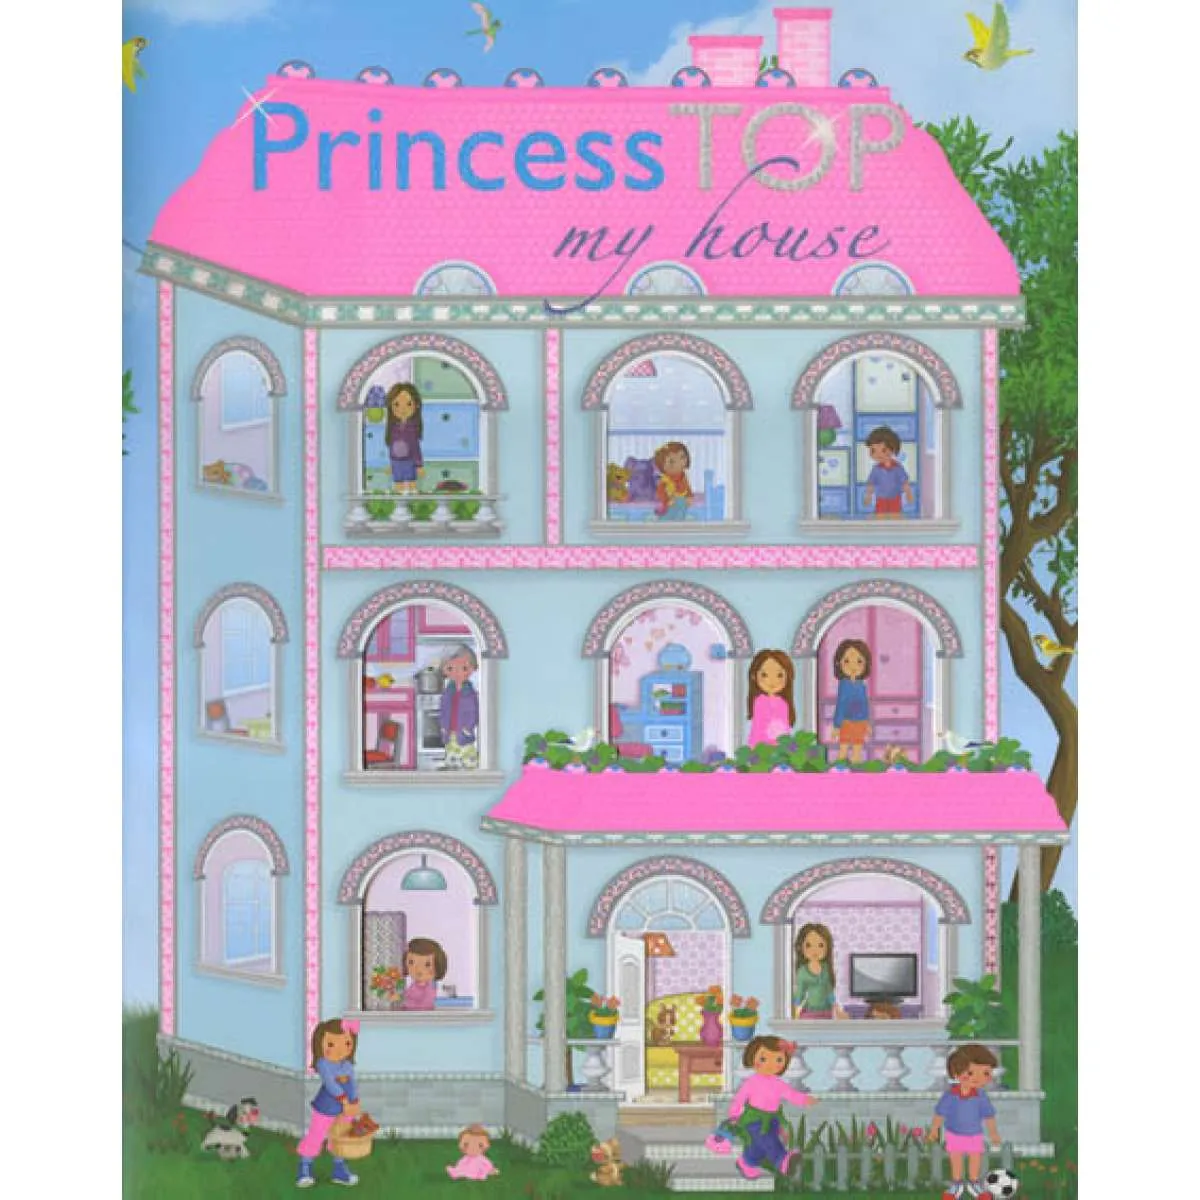 Top princess - My house 